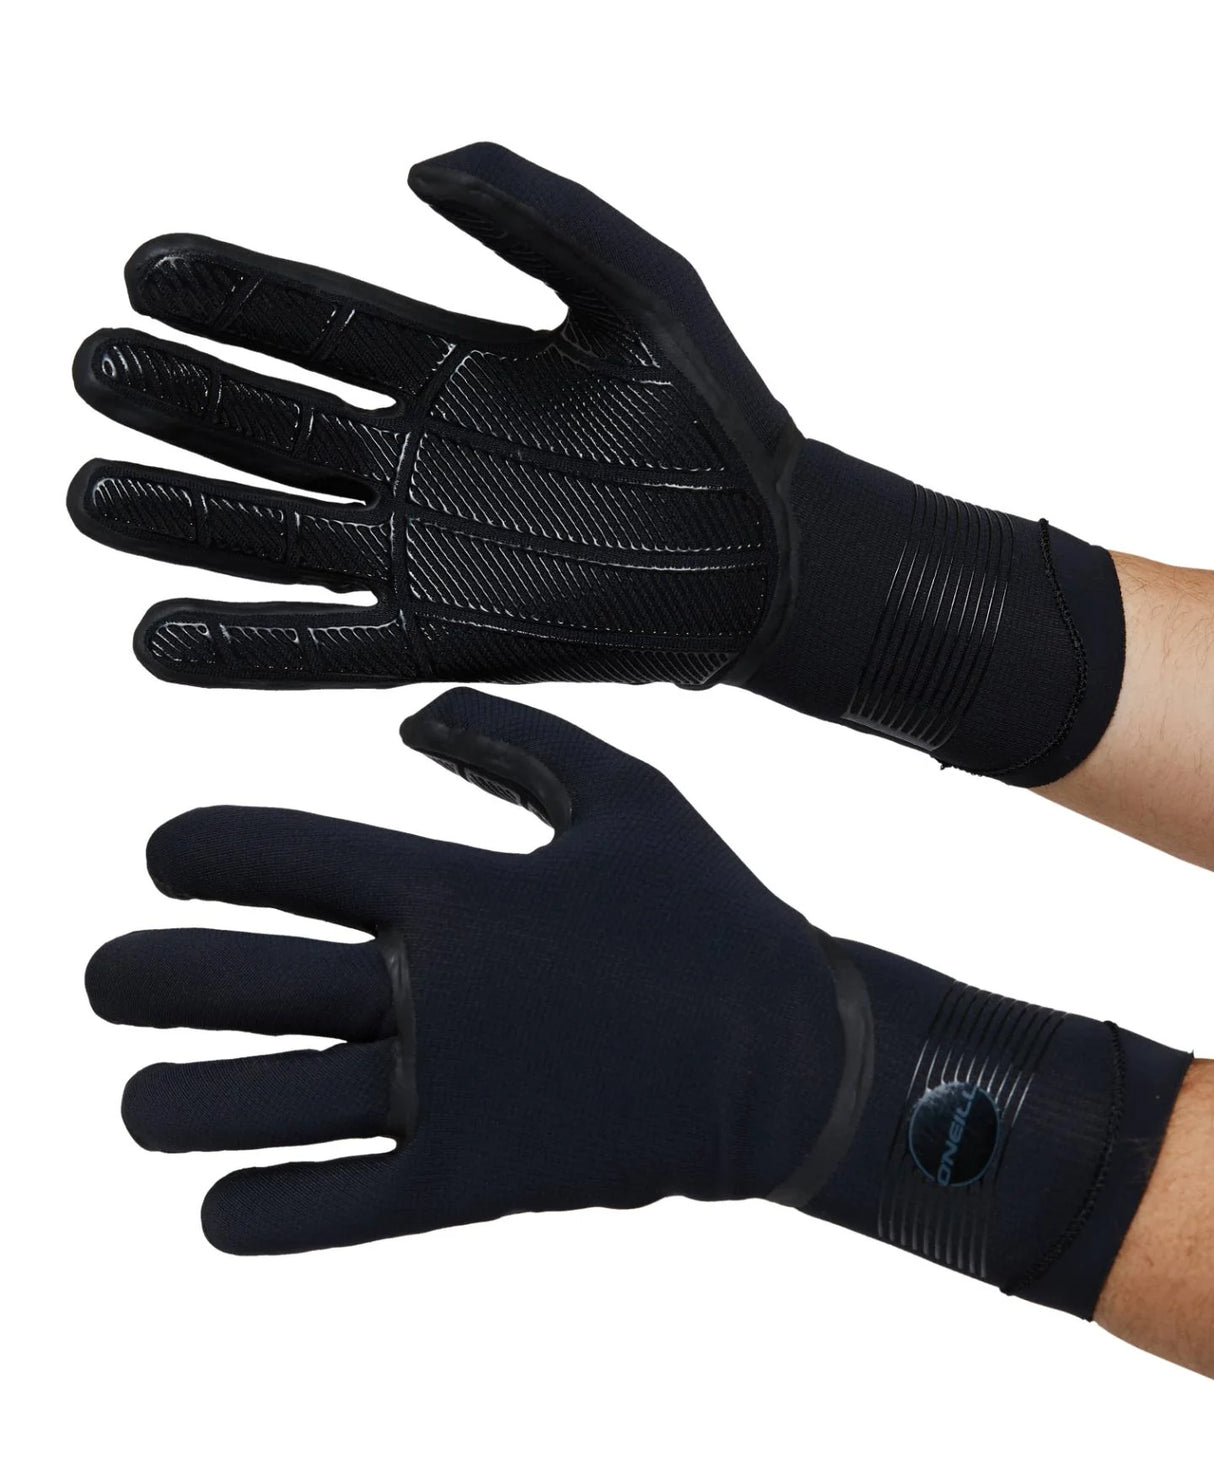 O'Neill Psycho Tech 1.5mm Wetsuit Gloves